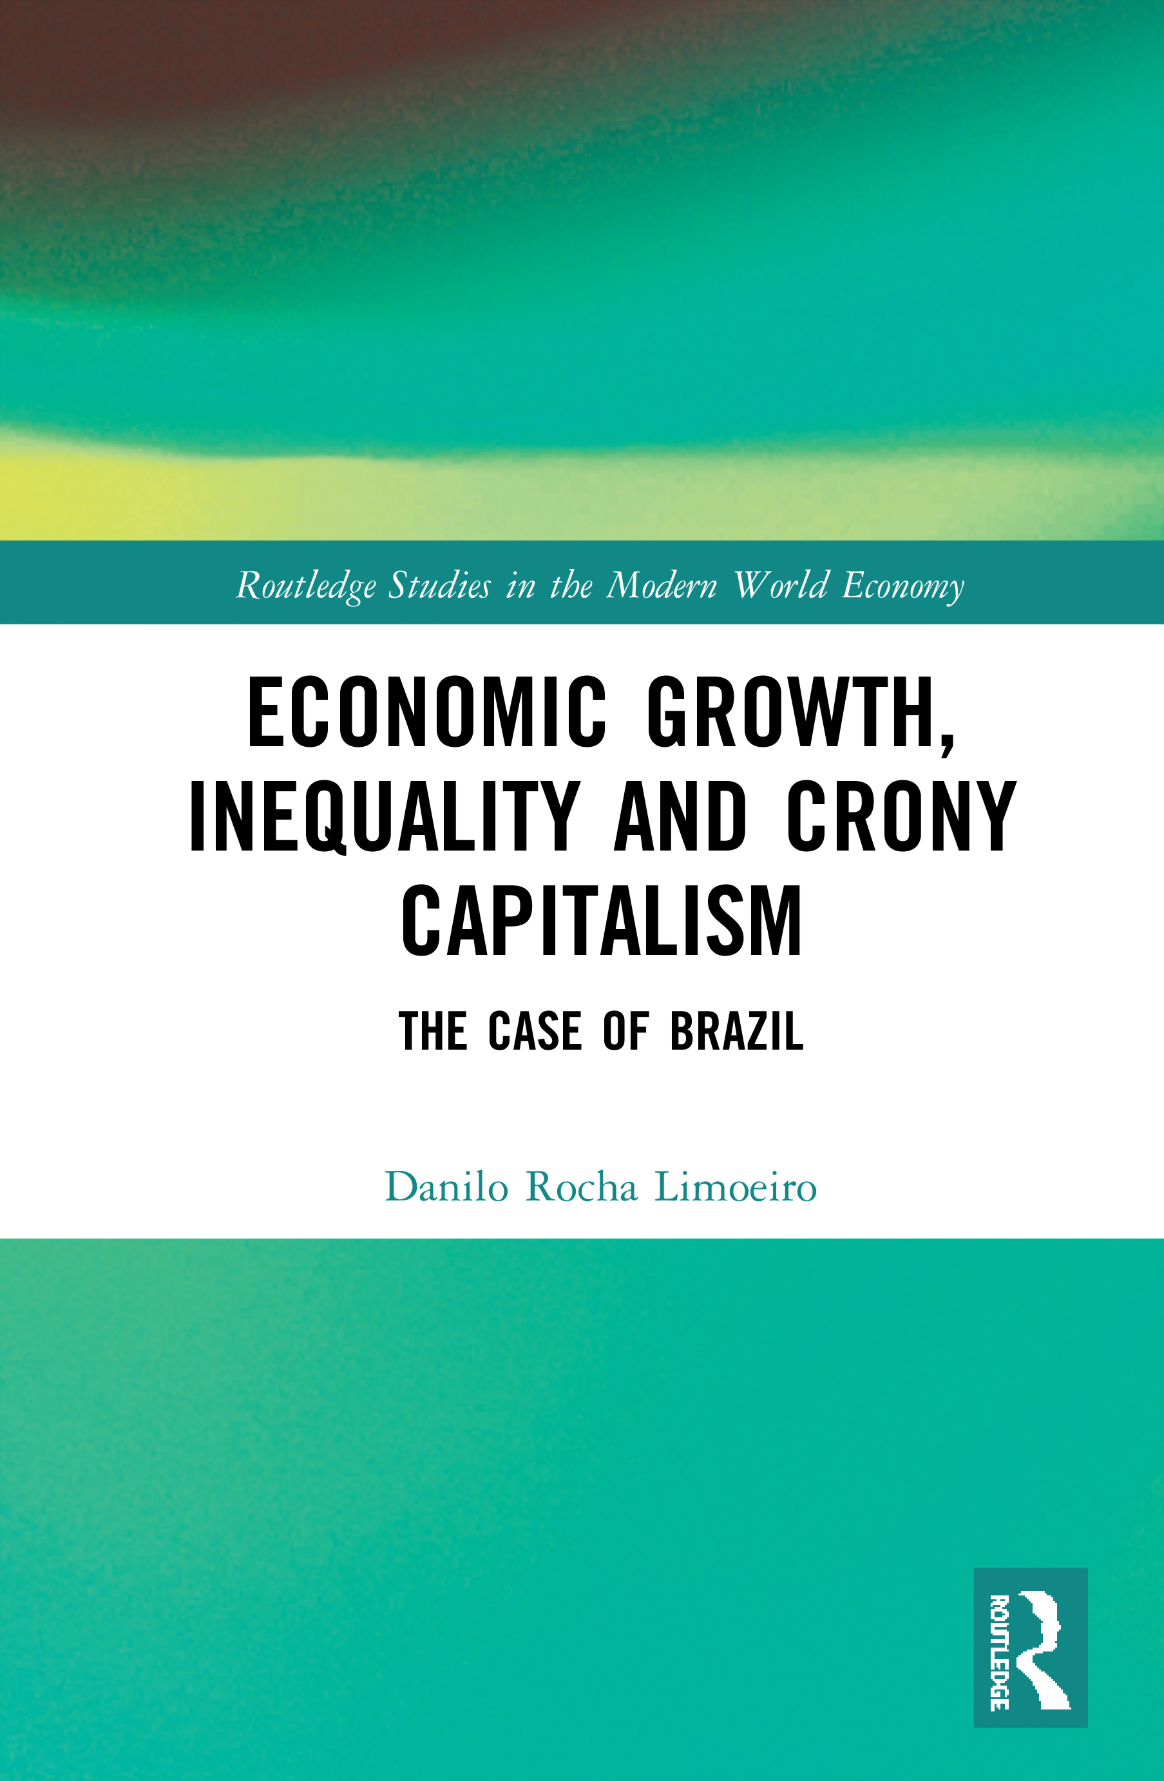 Economic Growth, Inequality and Crony Capitalism, The Case of Brazil - Danilo Rocha Limoeiro